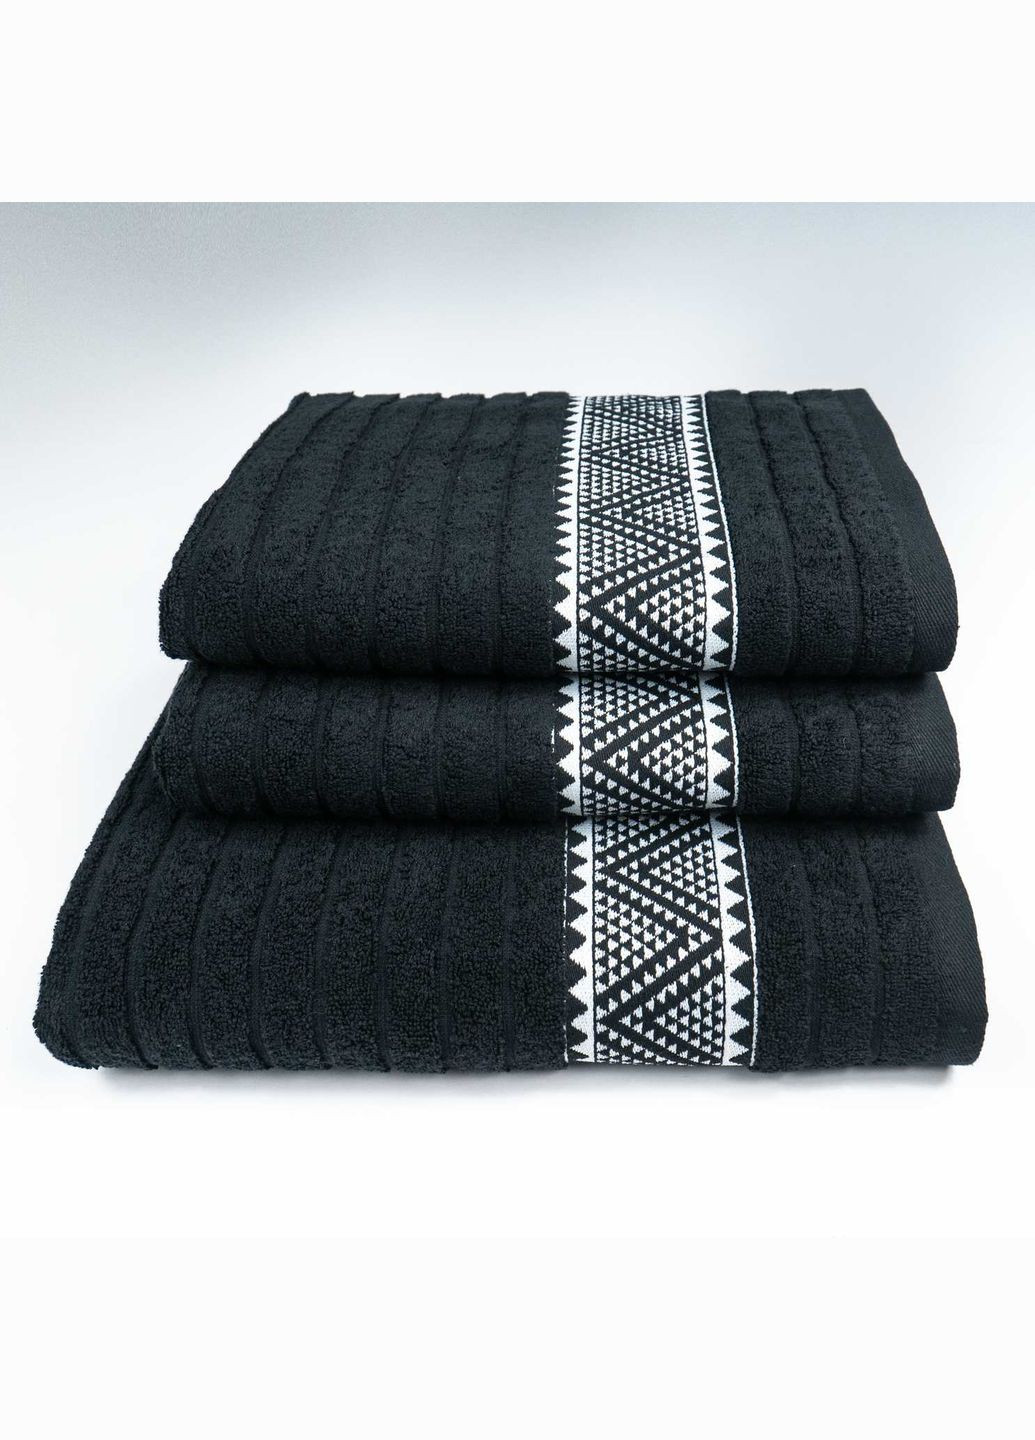 GM Textile комплект махровых полотенец зипп 3шт 50х90см, 50х90см, 70х140см 500г/м2 () черный производство -